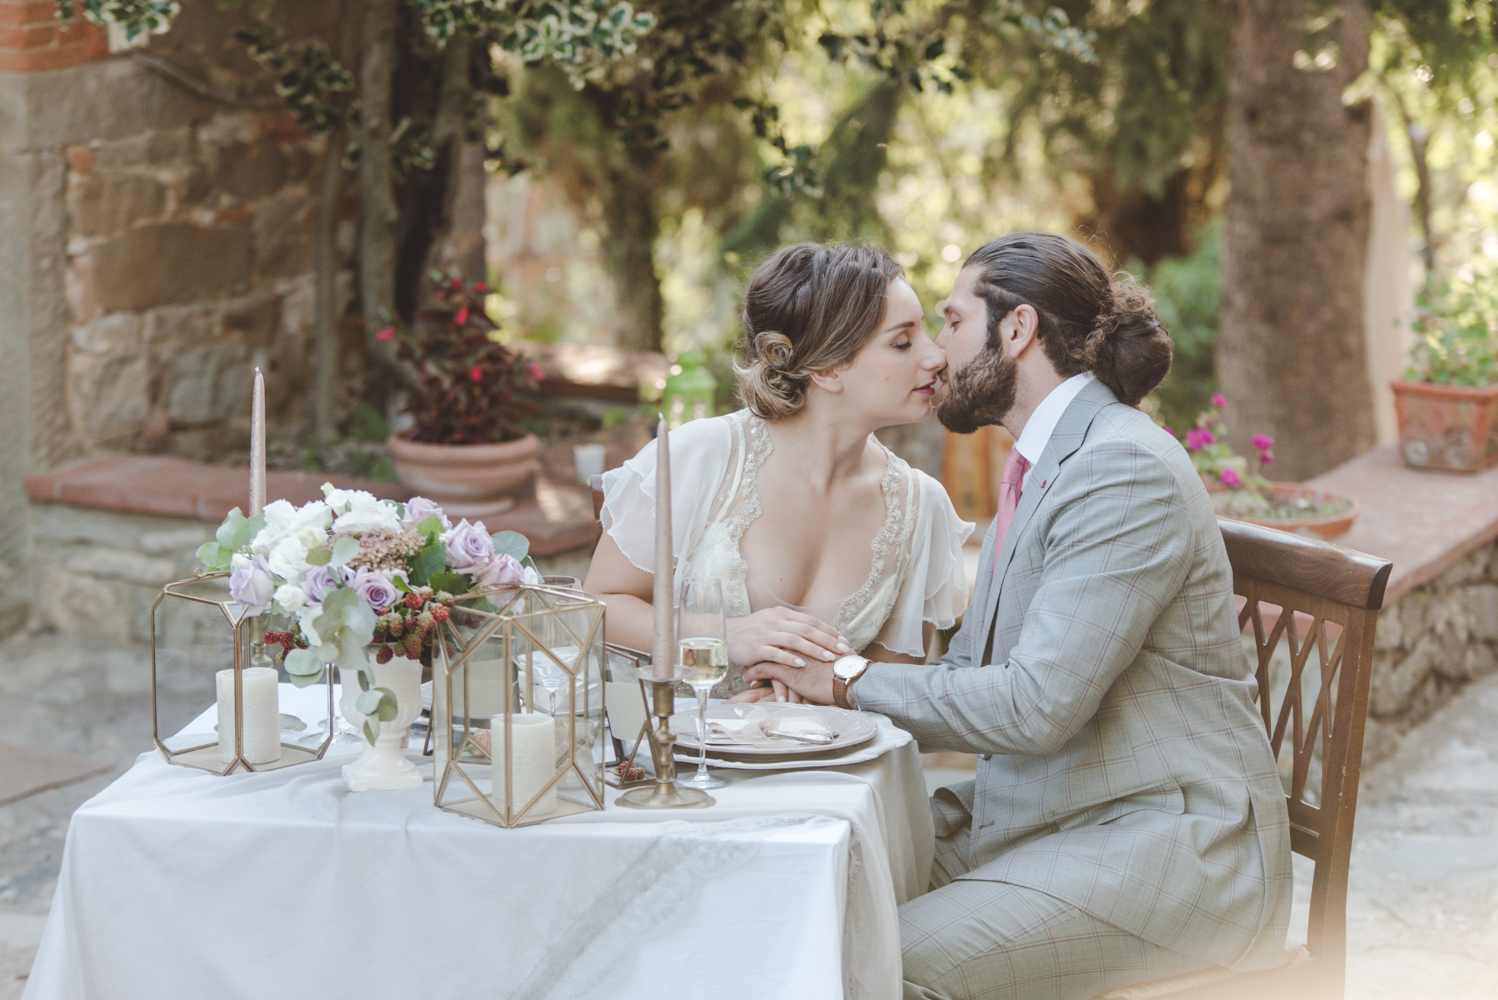 Elegant Rustic Autumn Wedding Inspiration in Tuscany